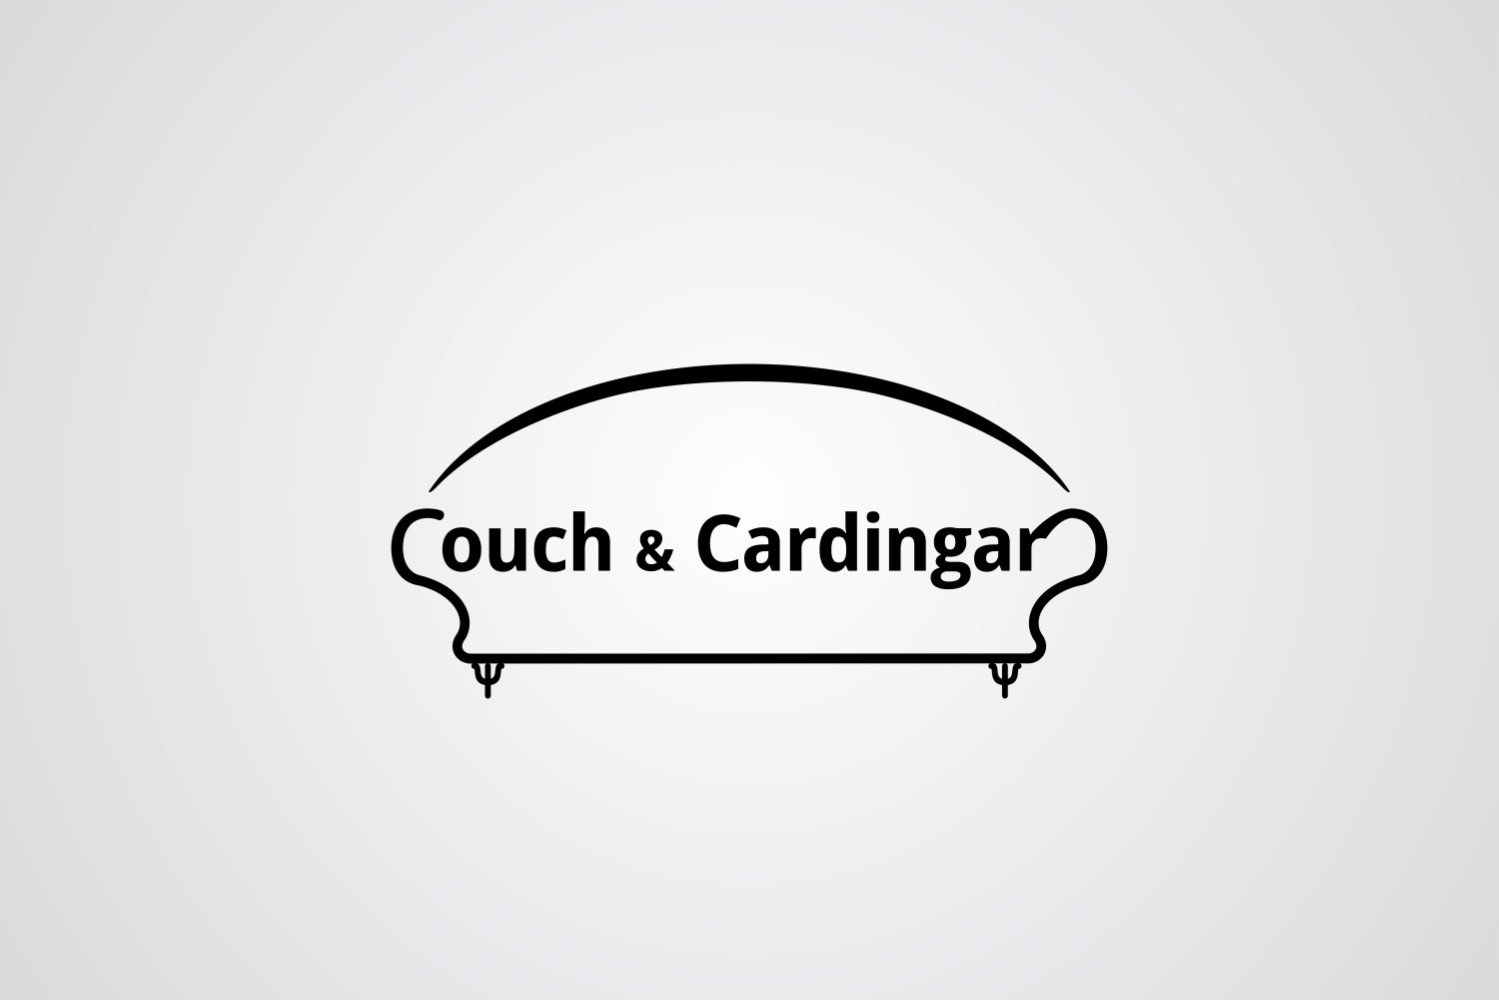 Couch & Cardingar Logo Design Template